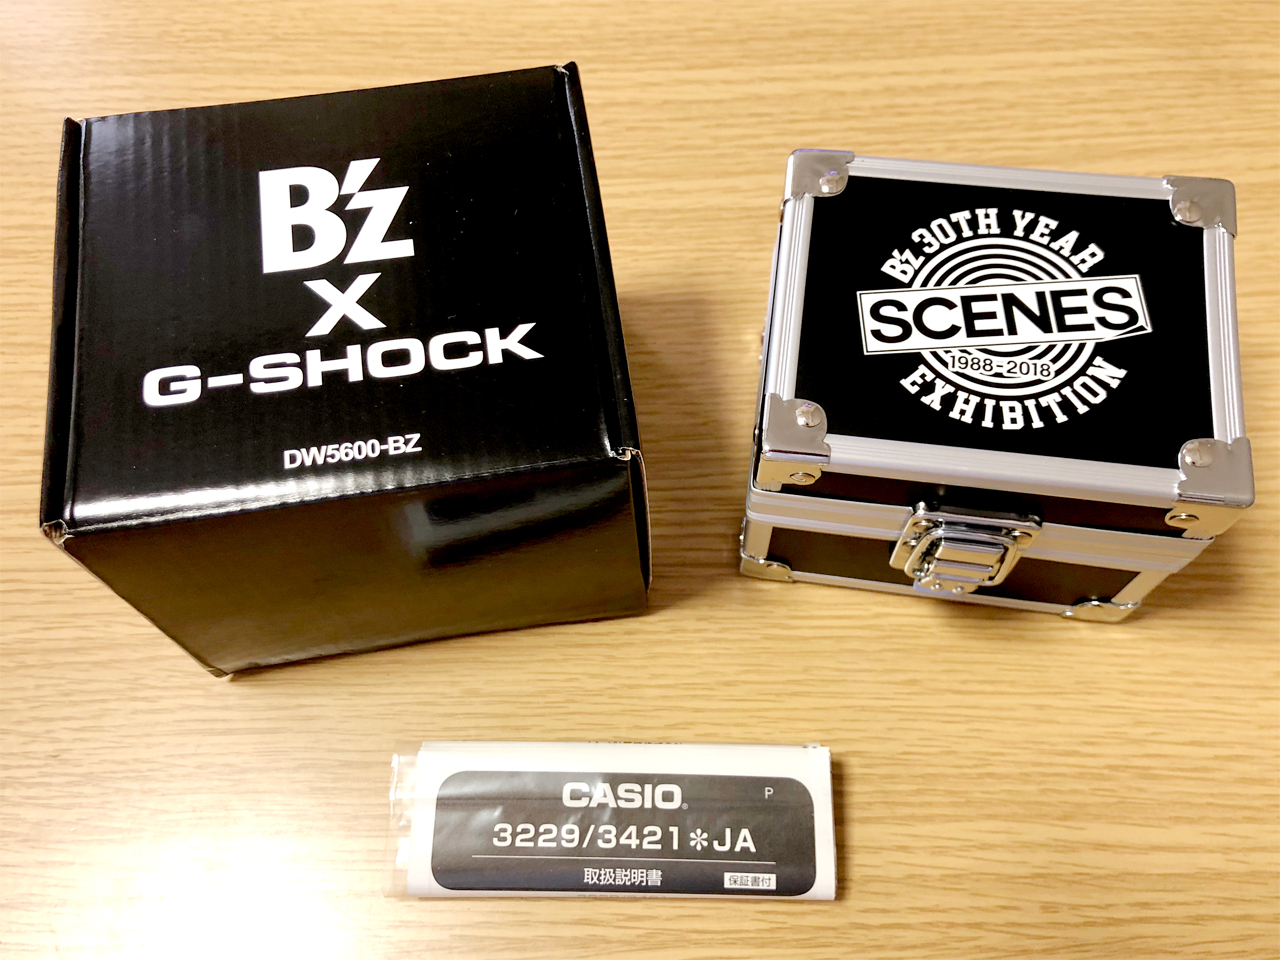 B'z × G-SHOCK (DW5600-BZ) コラボグッズレビュー・感想 さすがの限定 